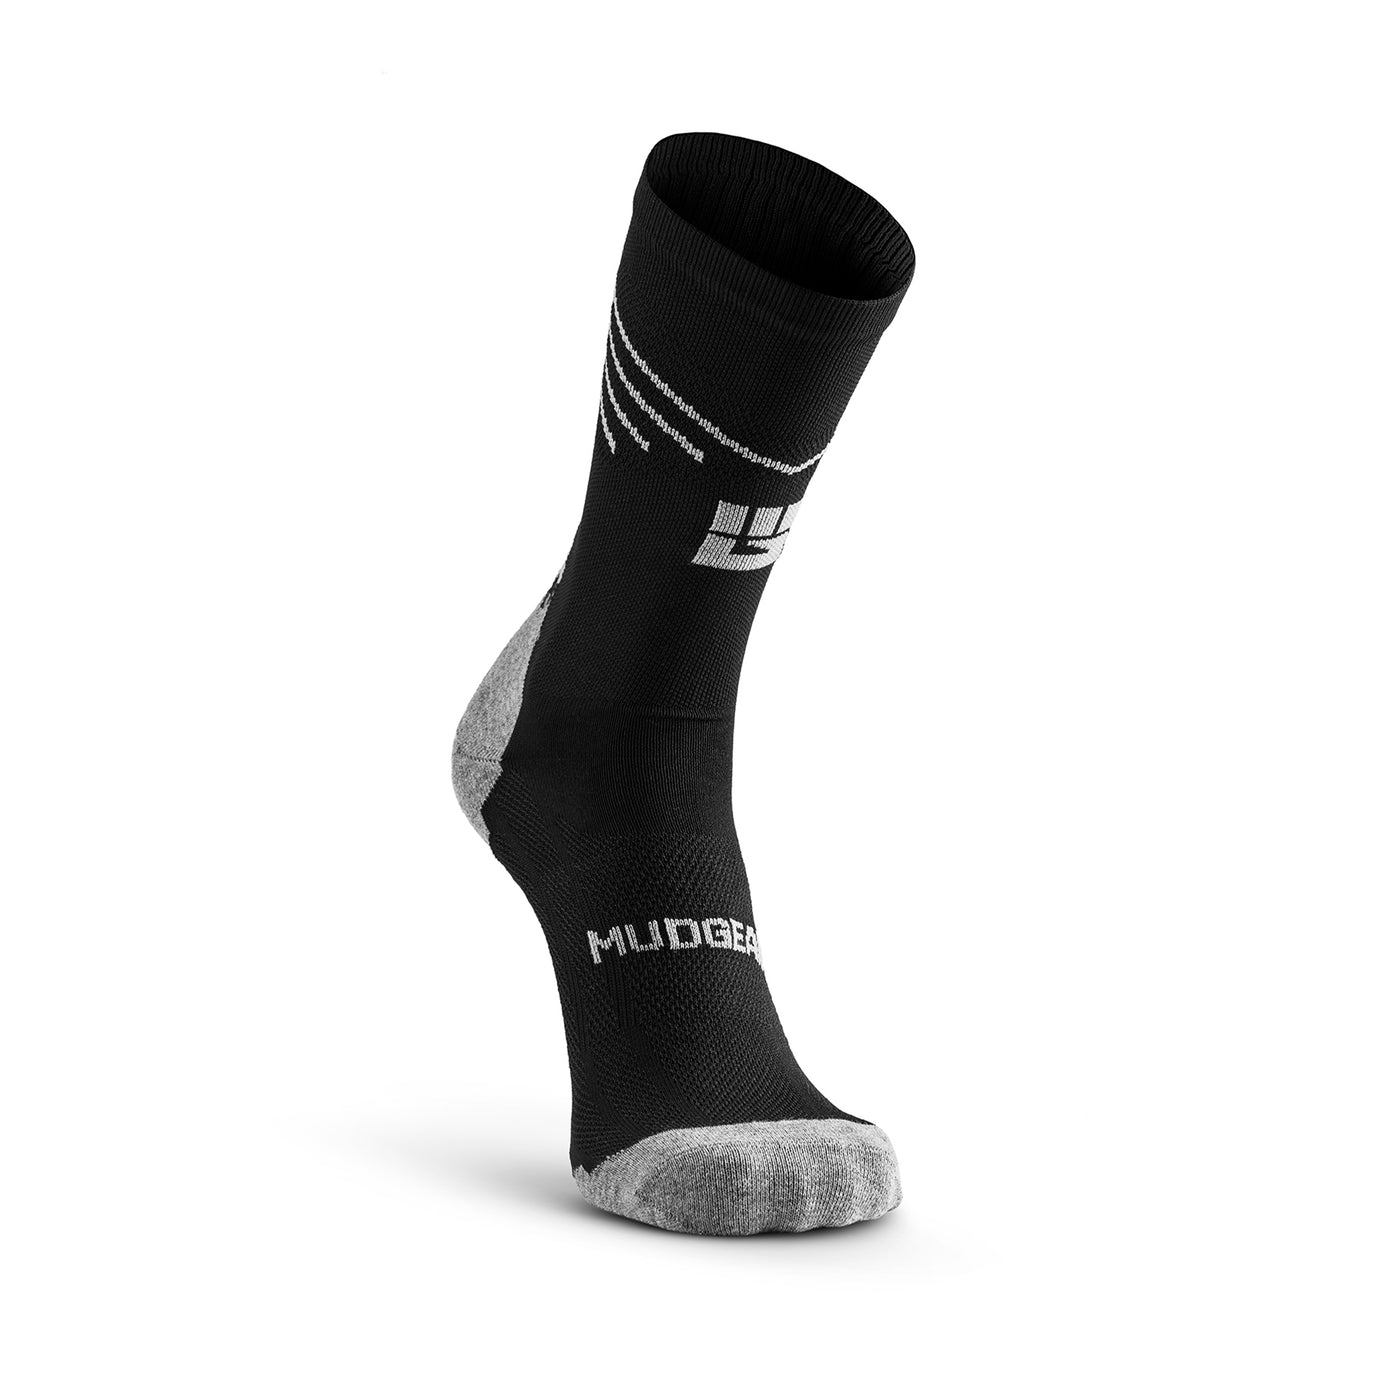 Mountain Biking (MTB) Socks - Black/Gray